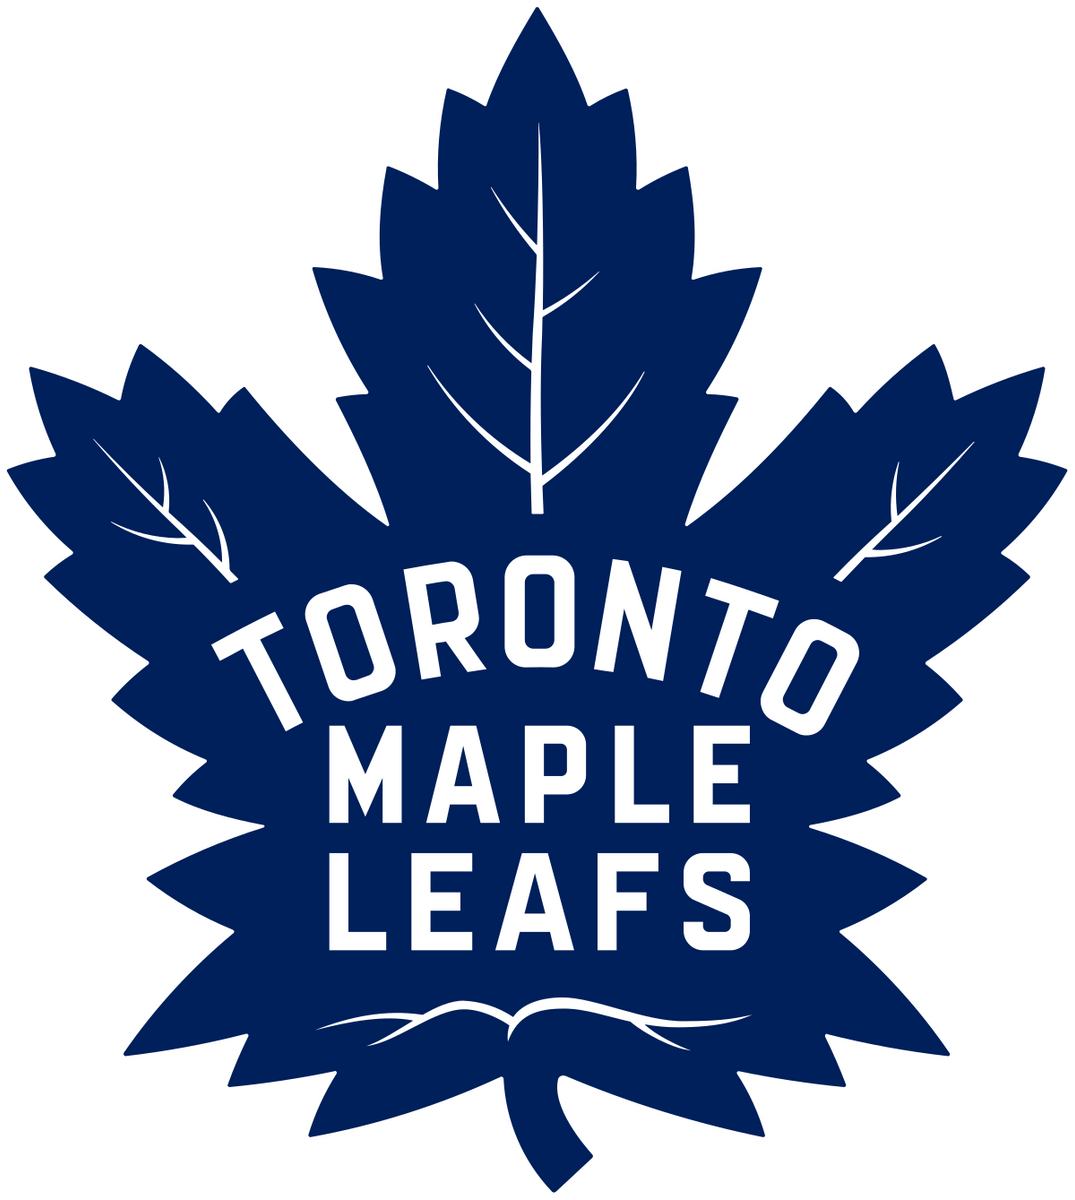 Toronto Maple Leafs Merch, Popular